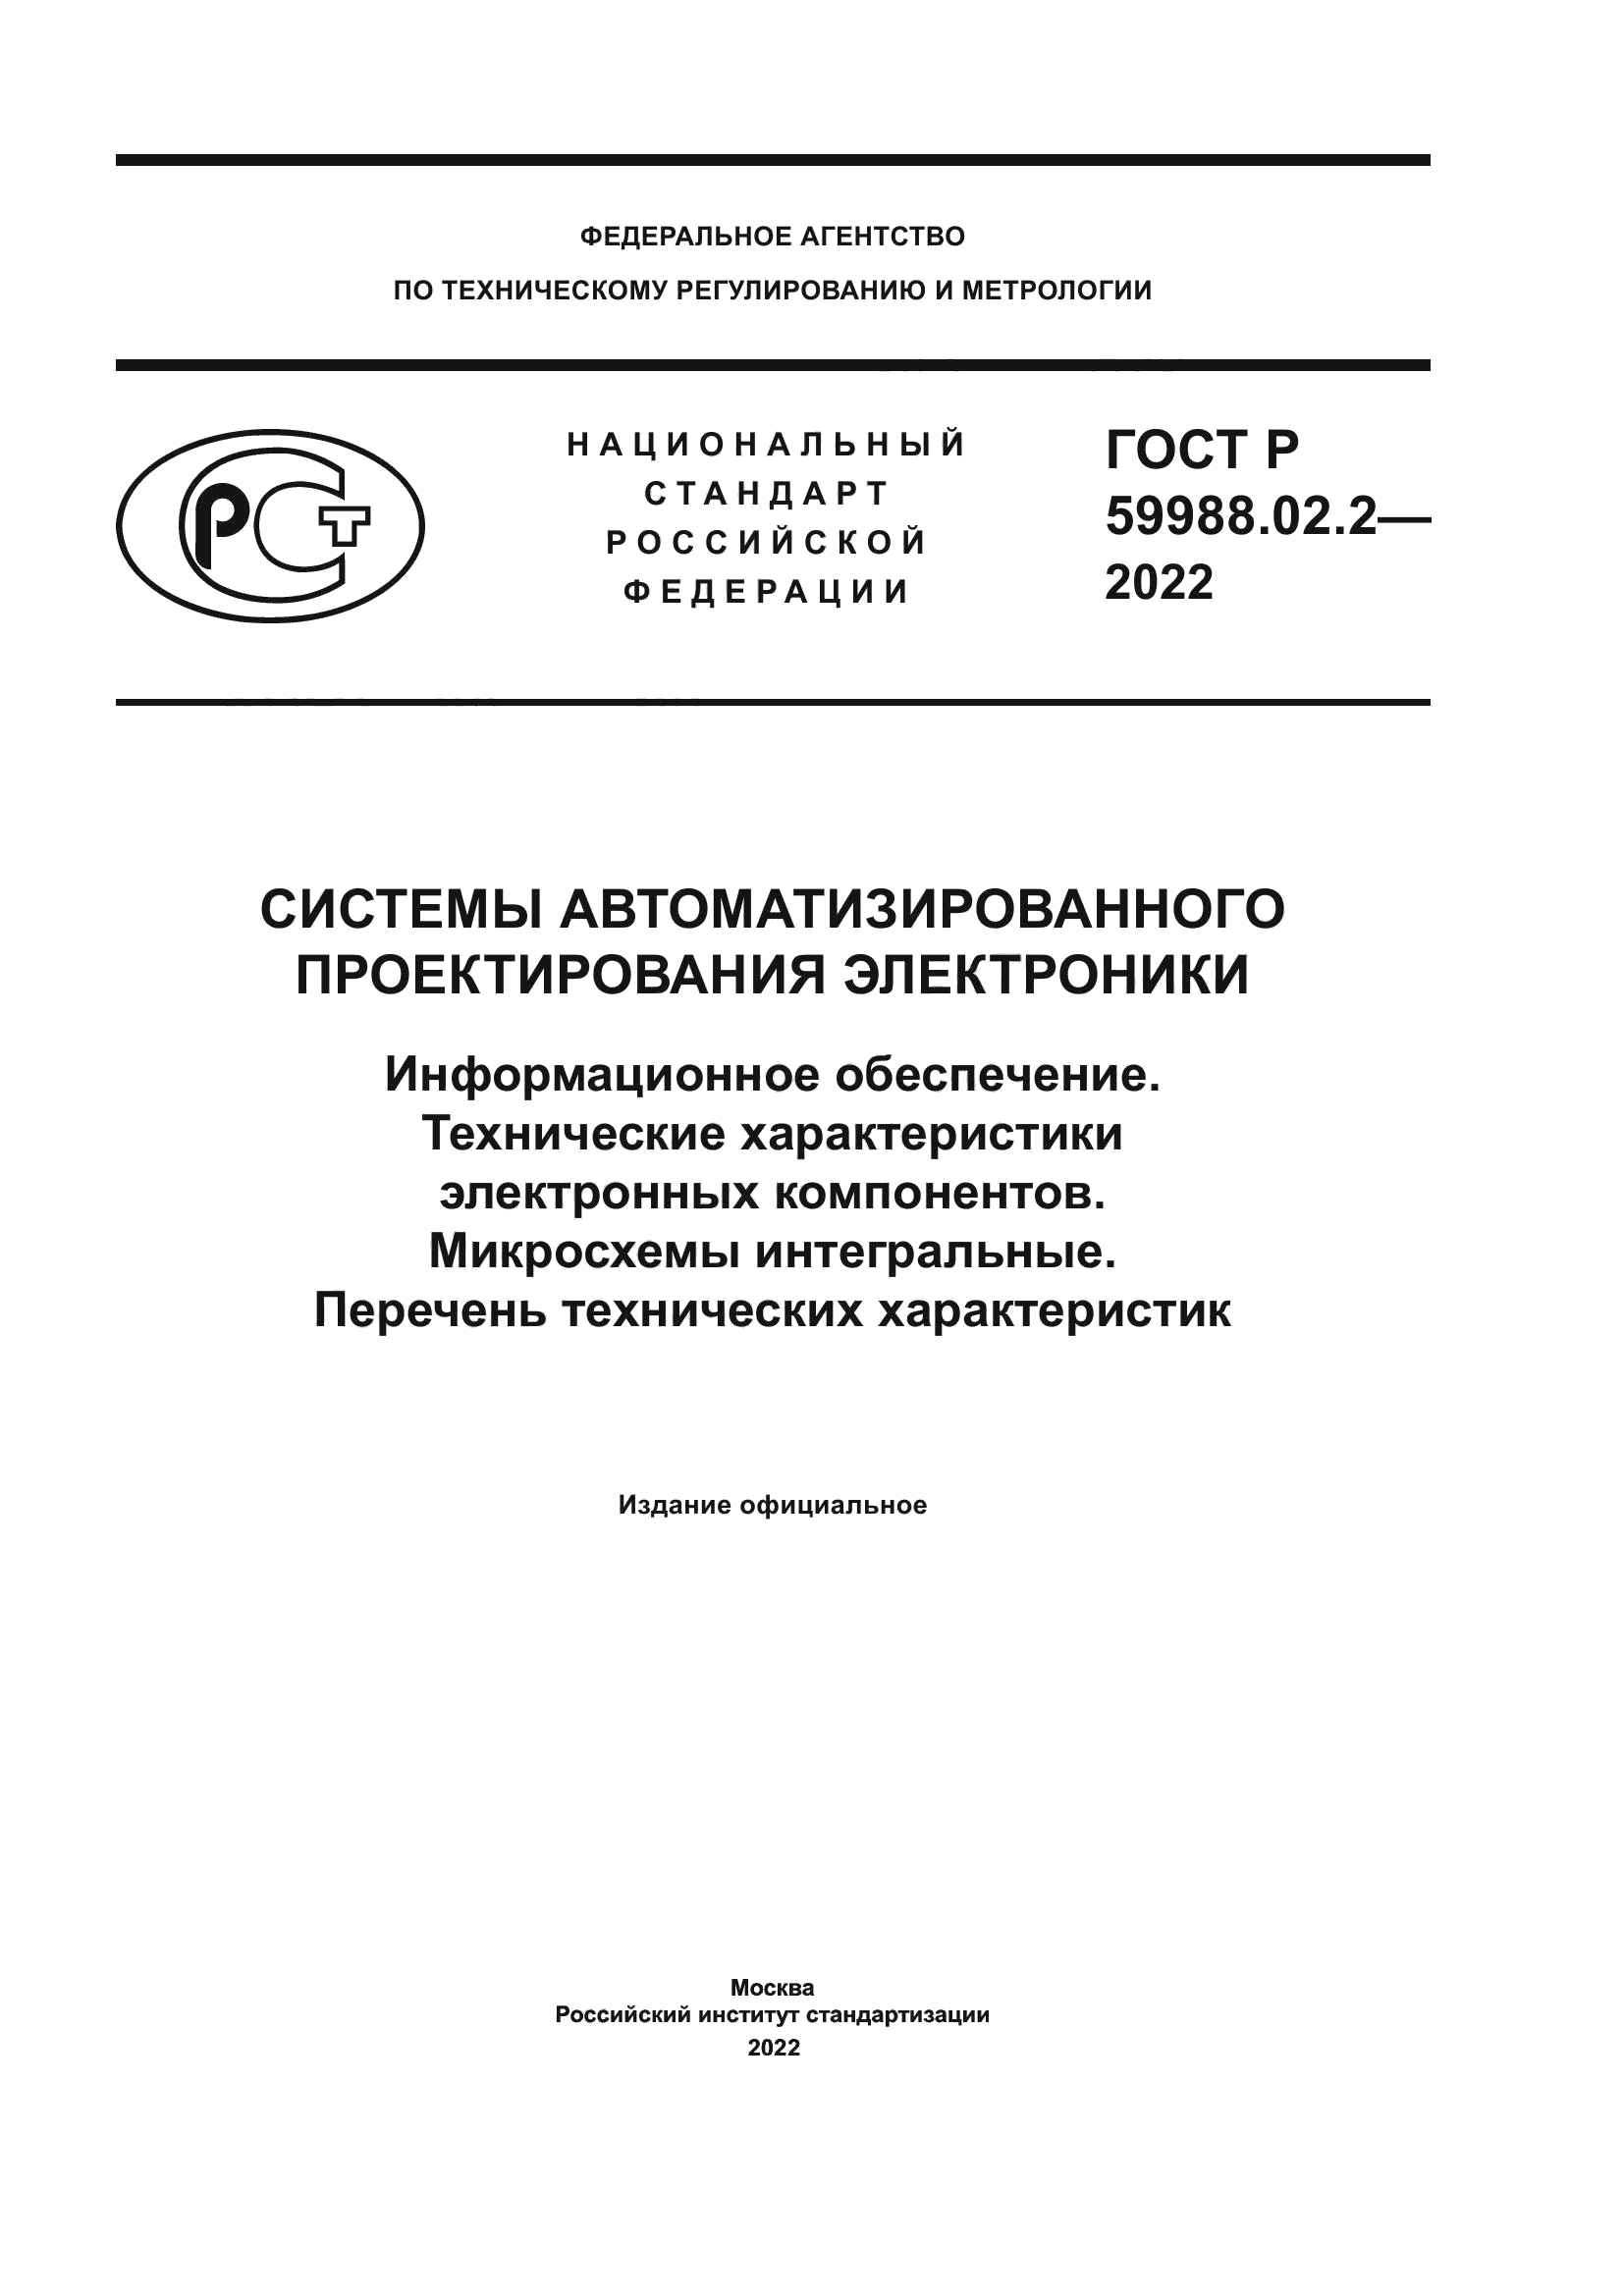 ГОСТ Р 59988.02.2-2022